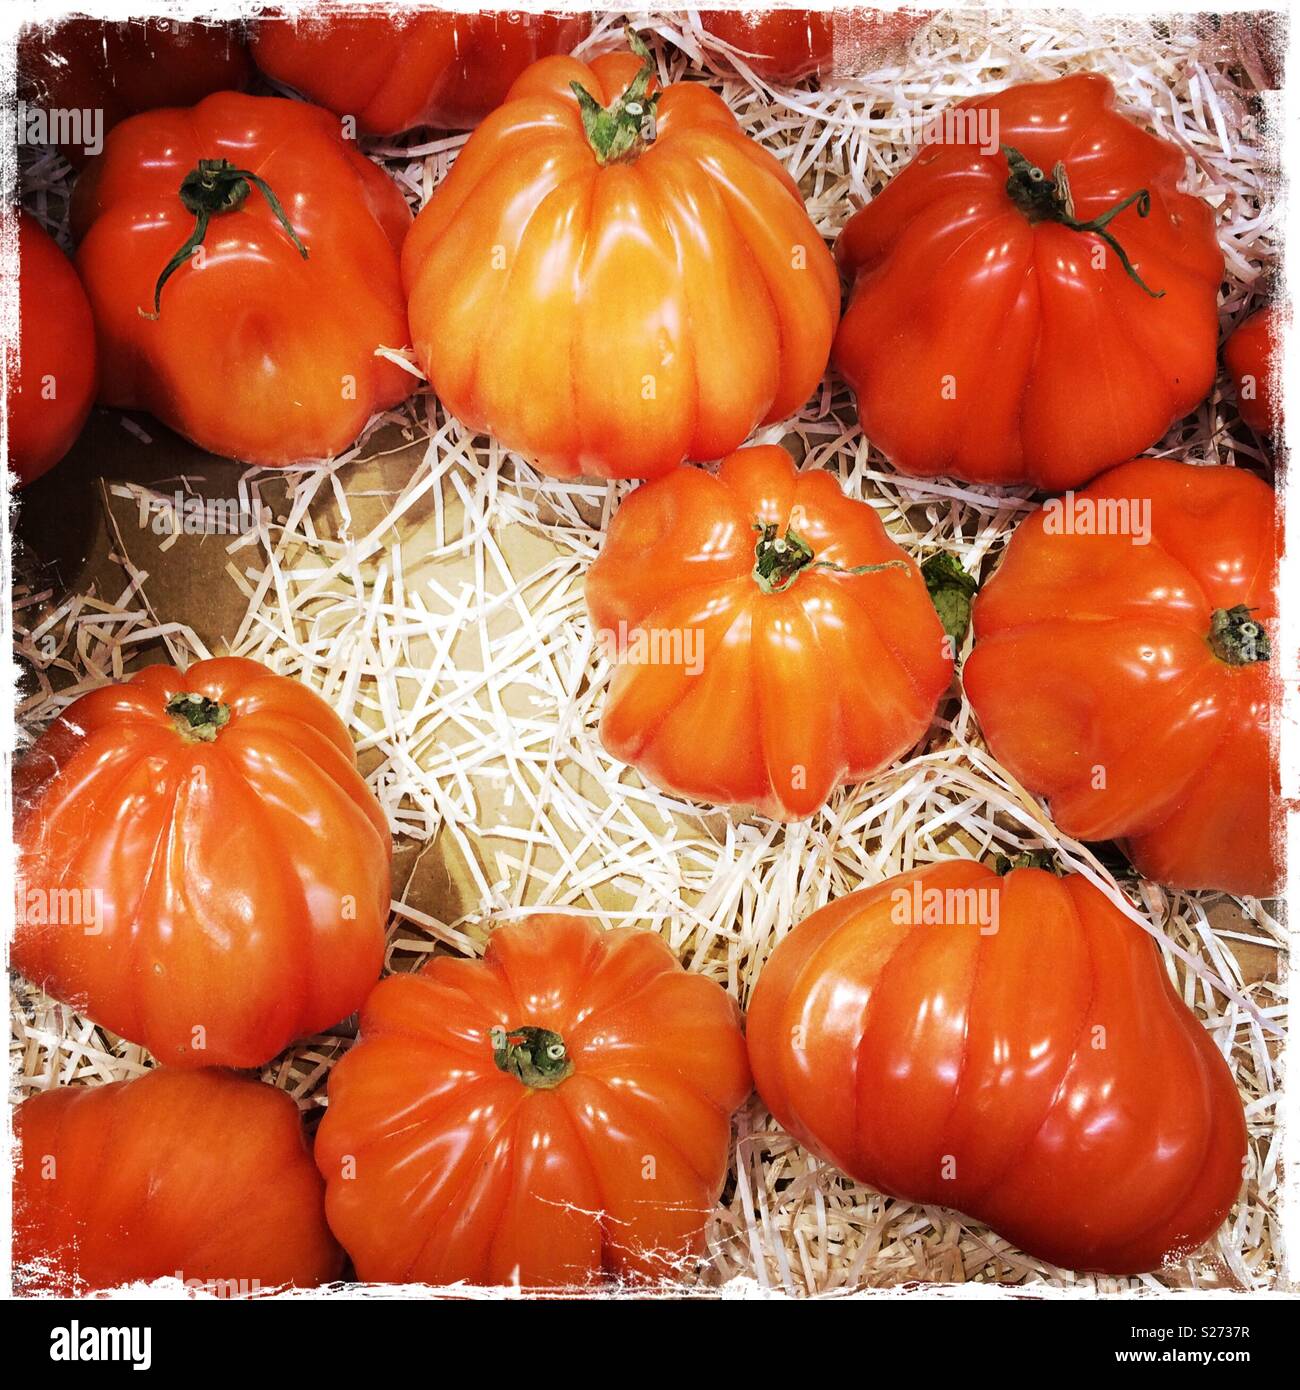 Marmande tomatoes for sale Stock Photo